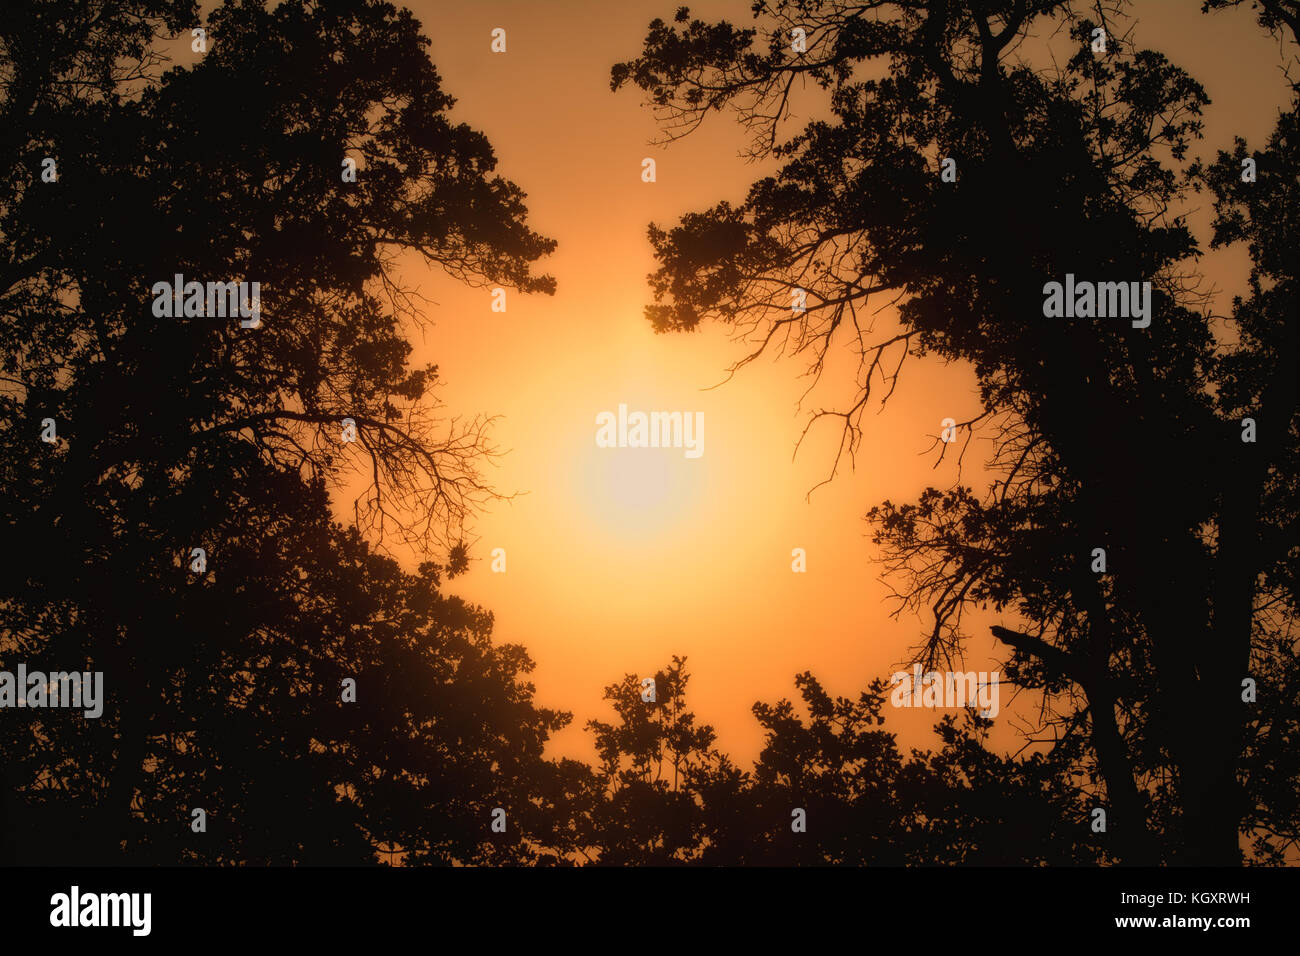 Early morning sun shining through trees in heavy fog, in hues of deep orange Stock Photo